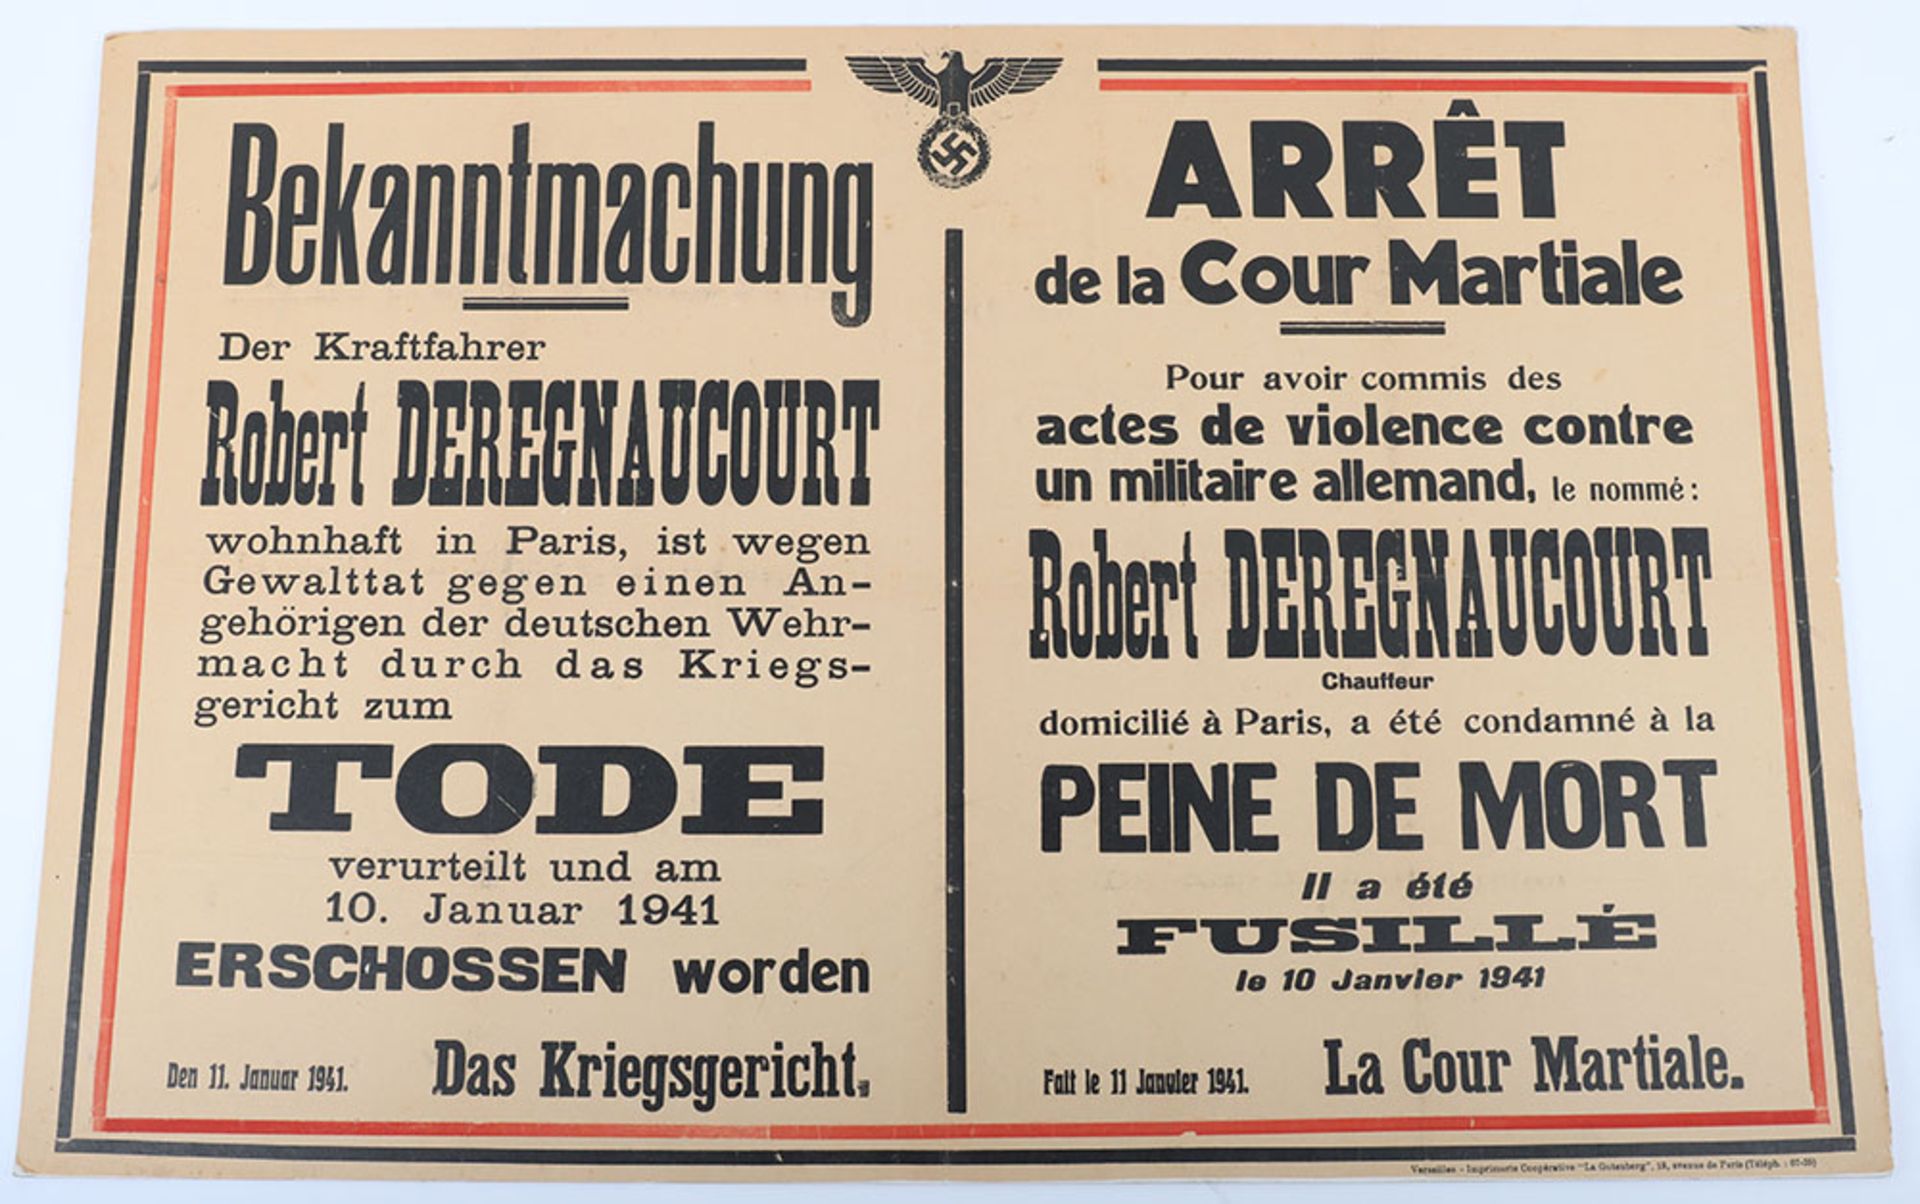 Powerful original German Poster announcing the execution of Robert Deregnaucourt